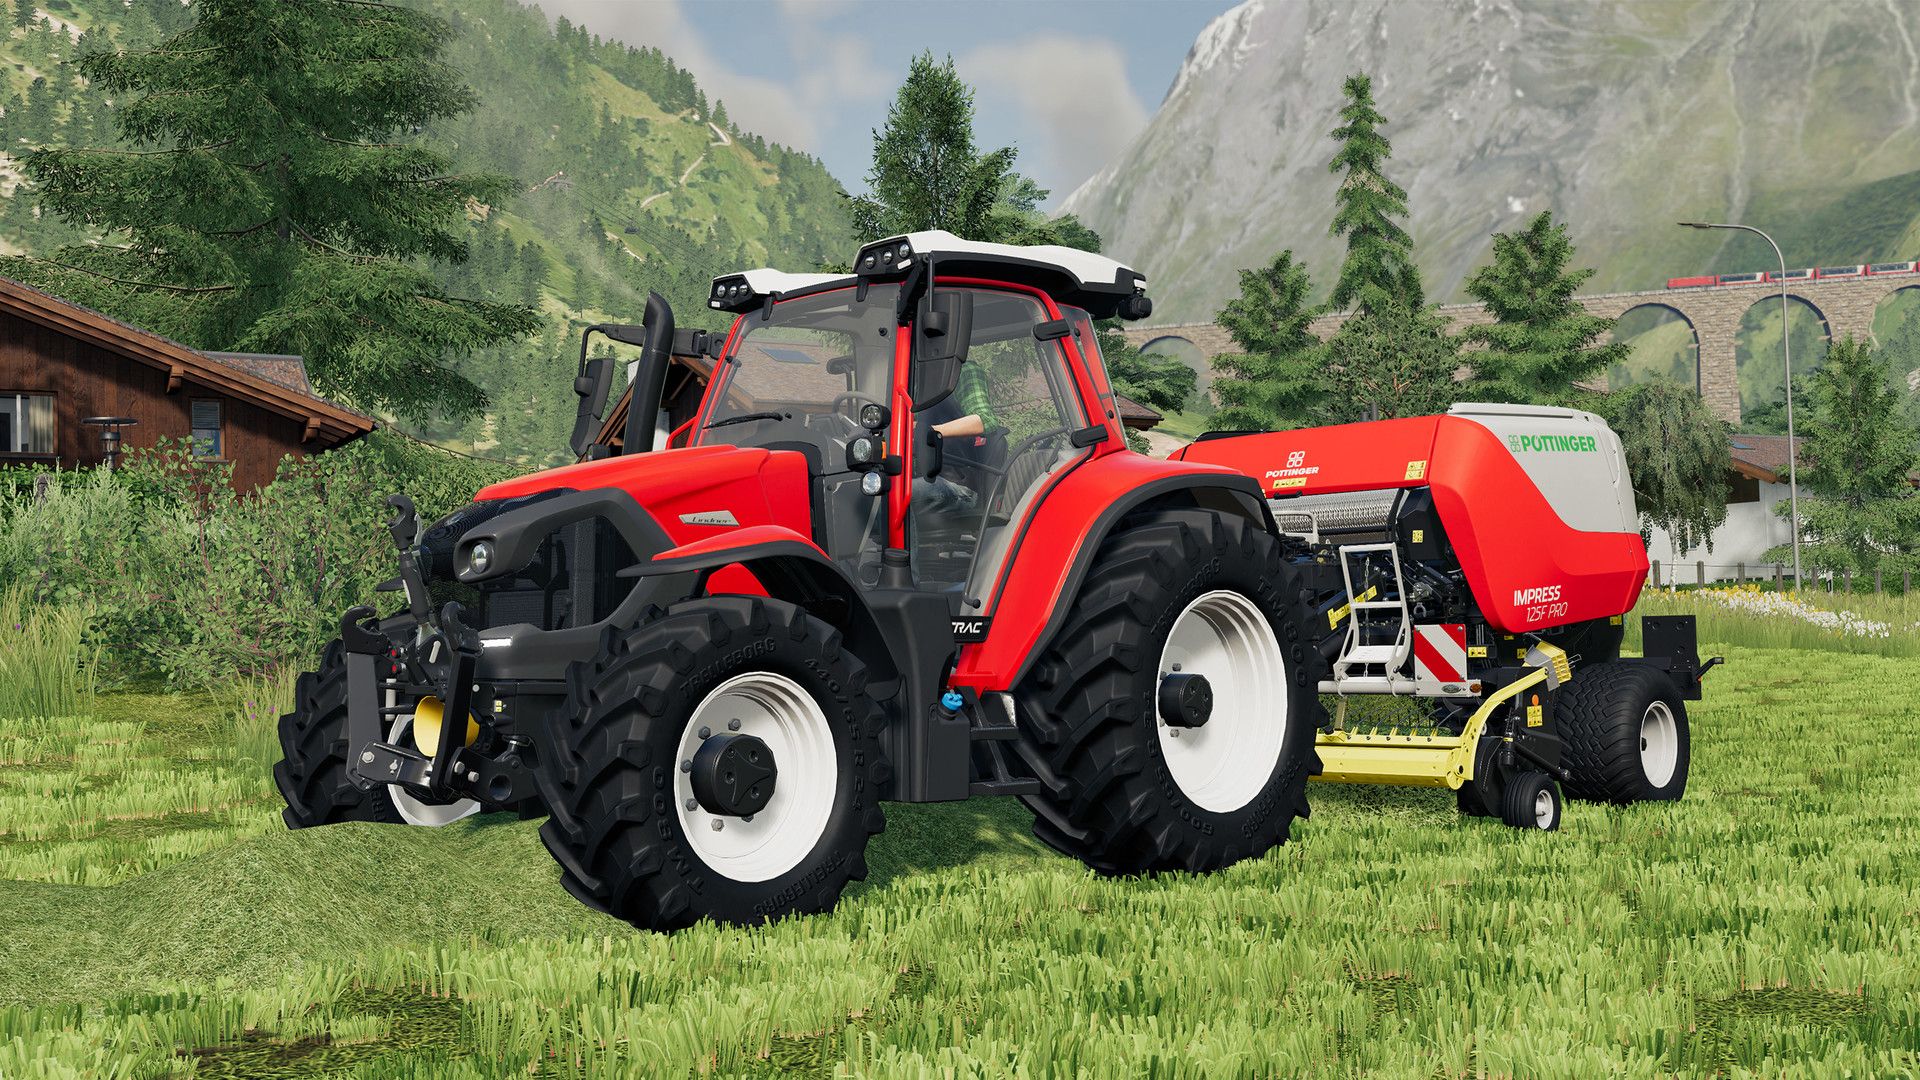 Farming Simulator 19 - Alpine Farming Expansion